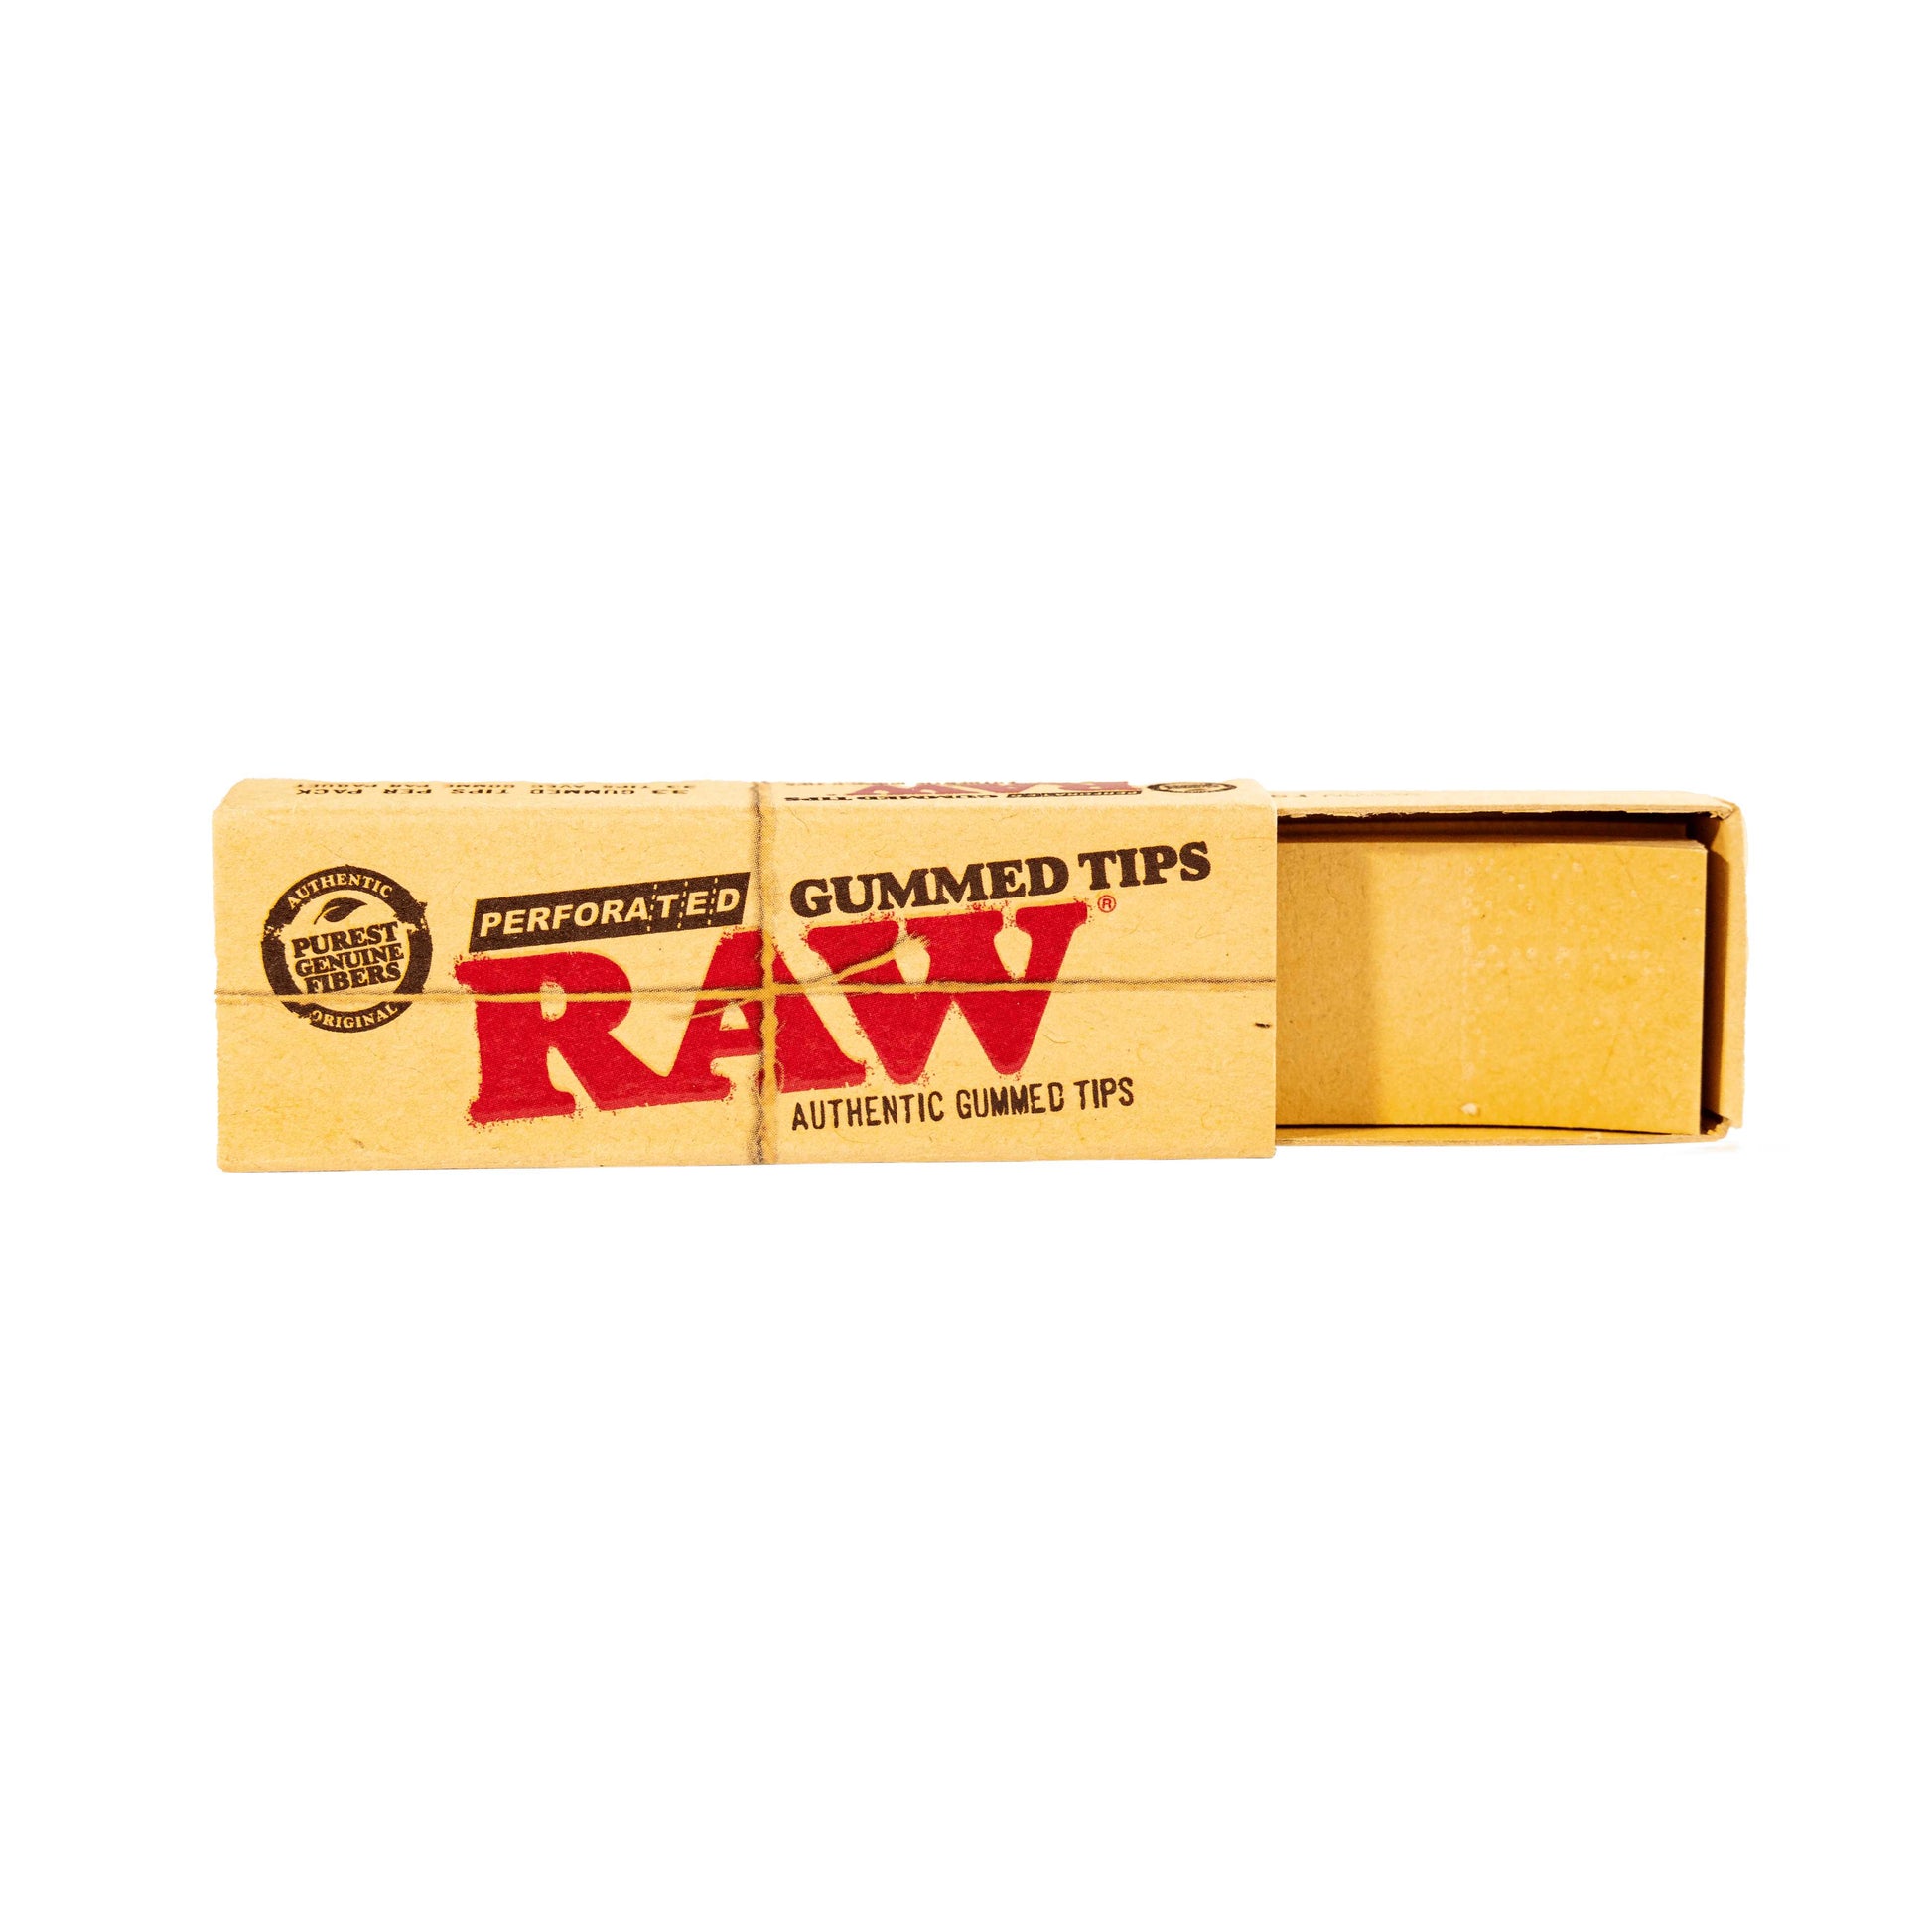 RAW Filter Tips - Gummed Tips - - Filter Tips - RAW - Cali Tobacconist